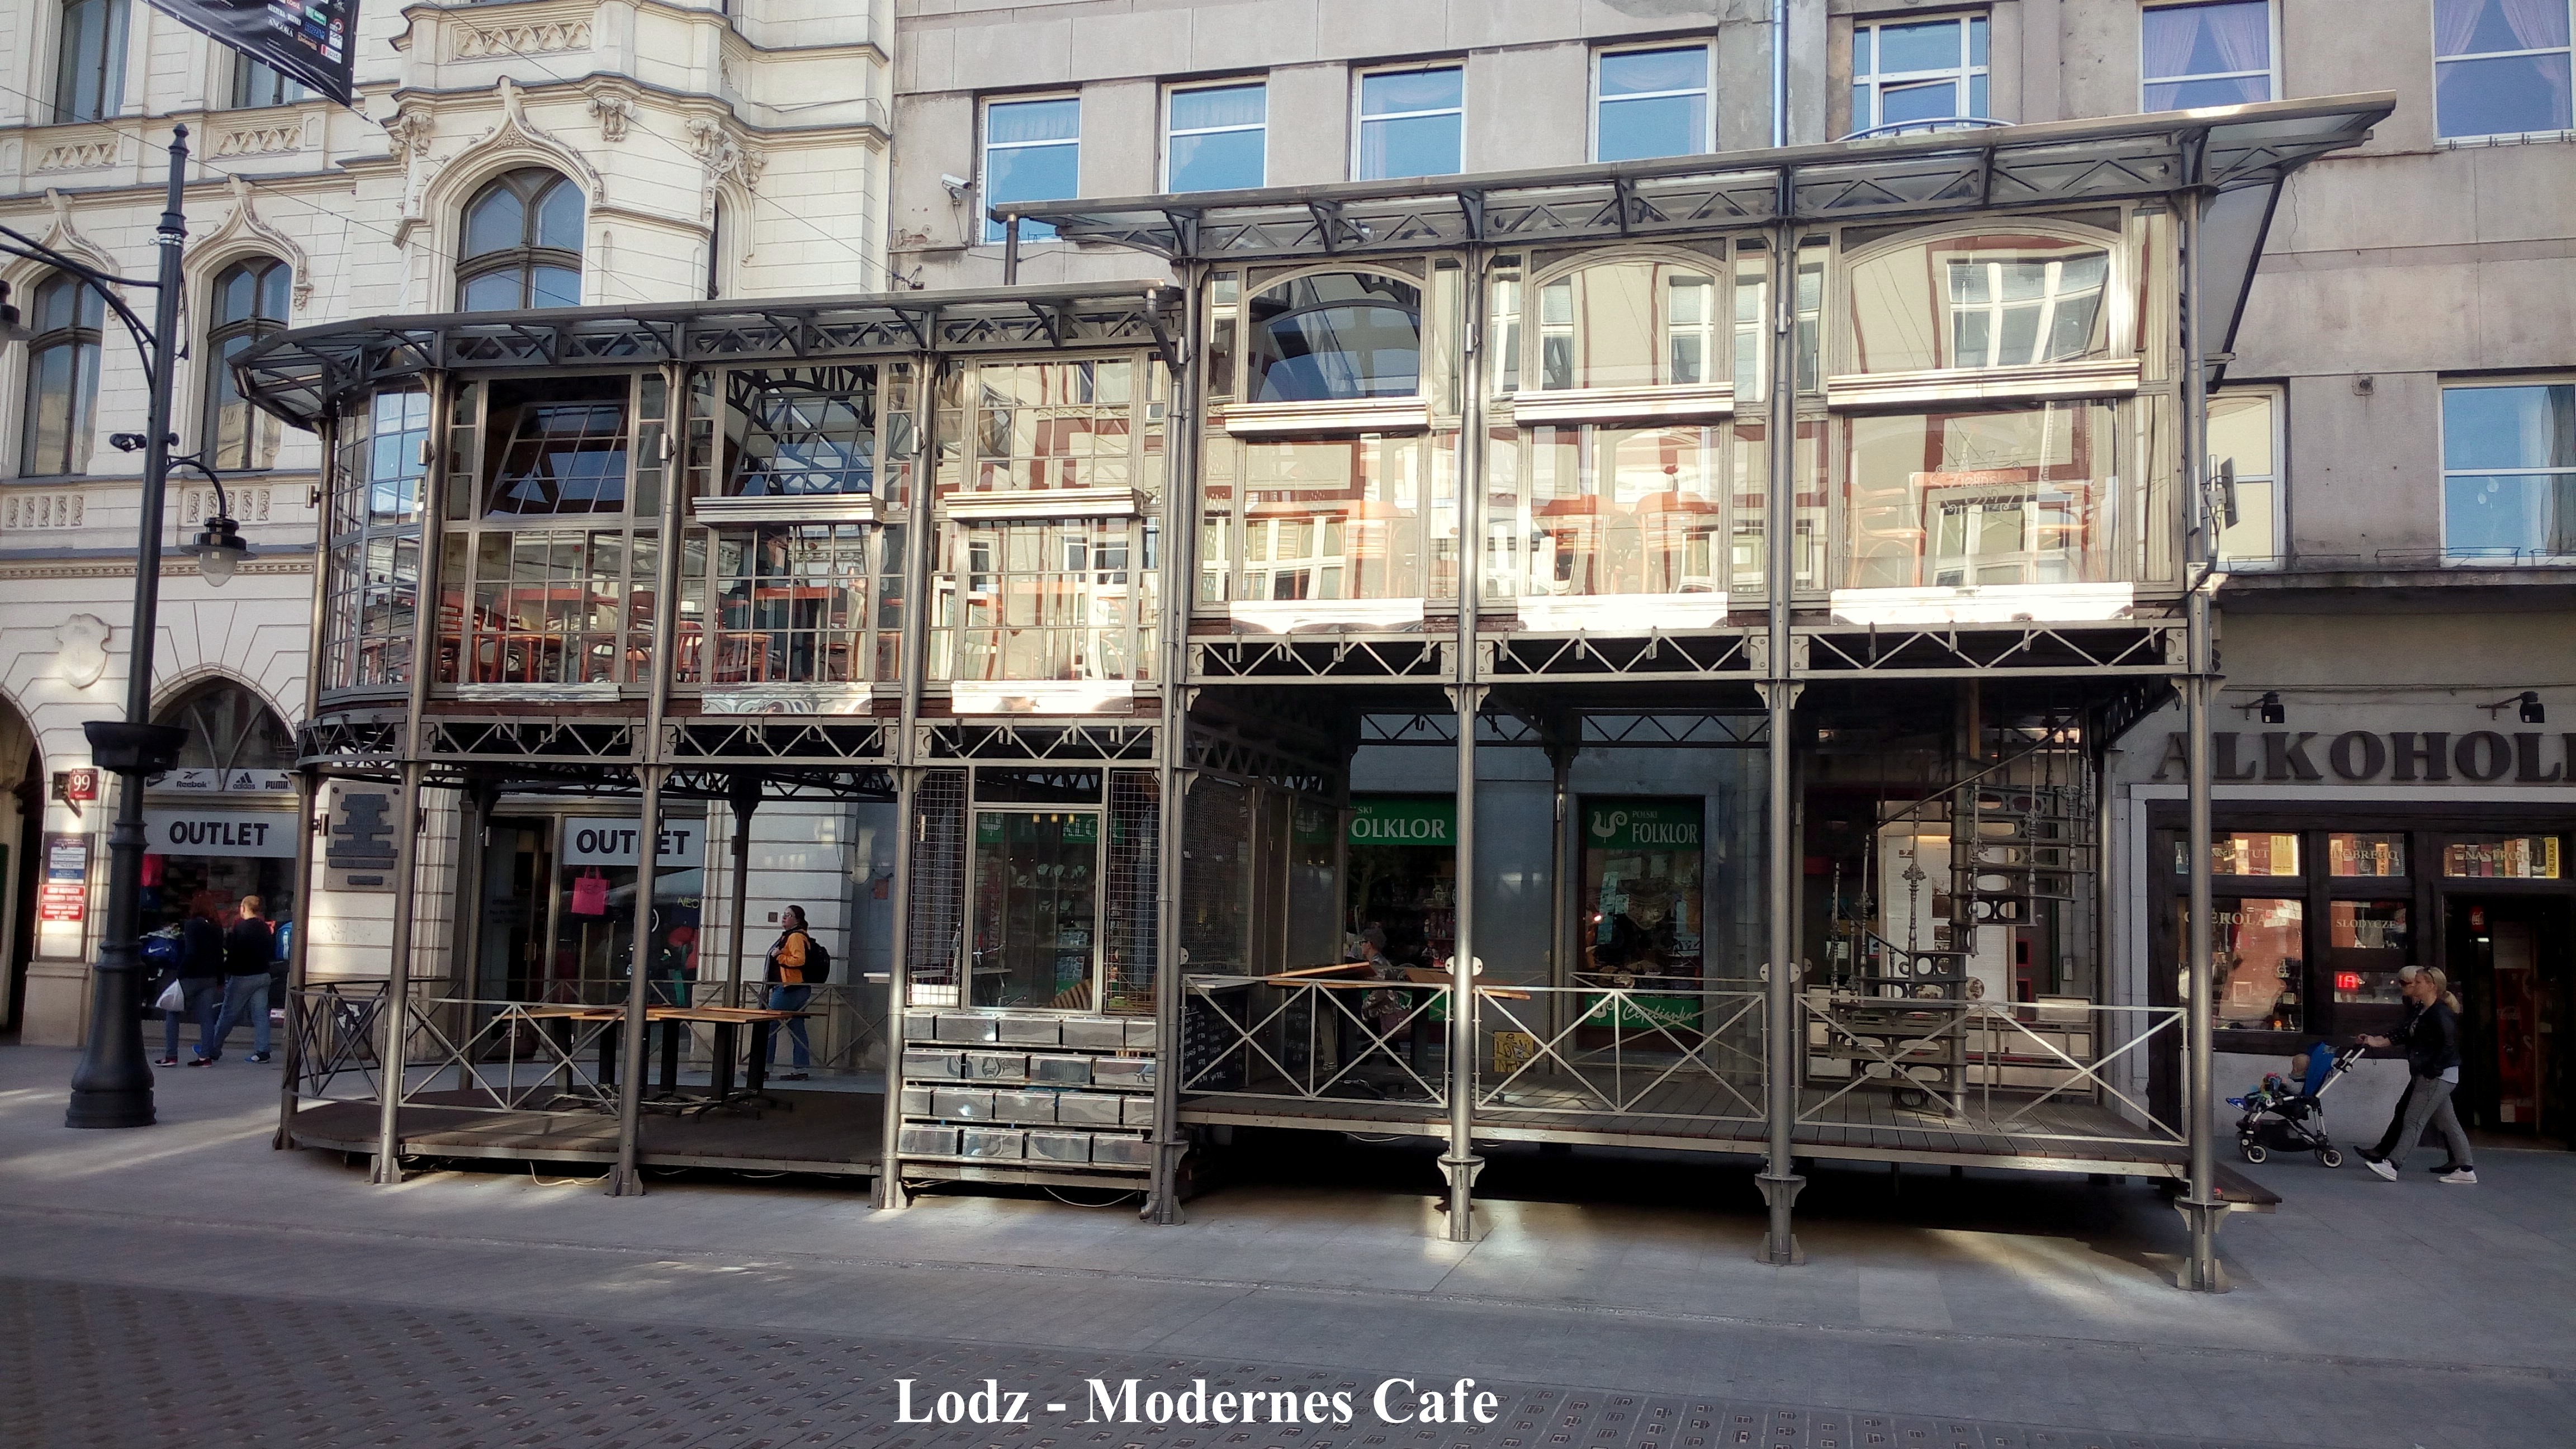 Lodz Modernes Cafe